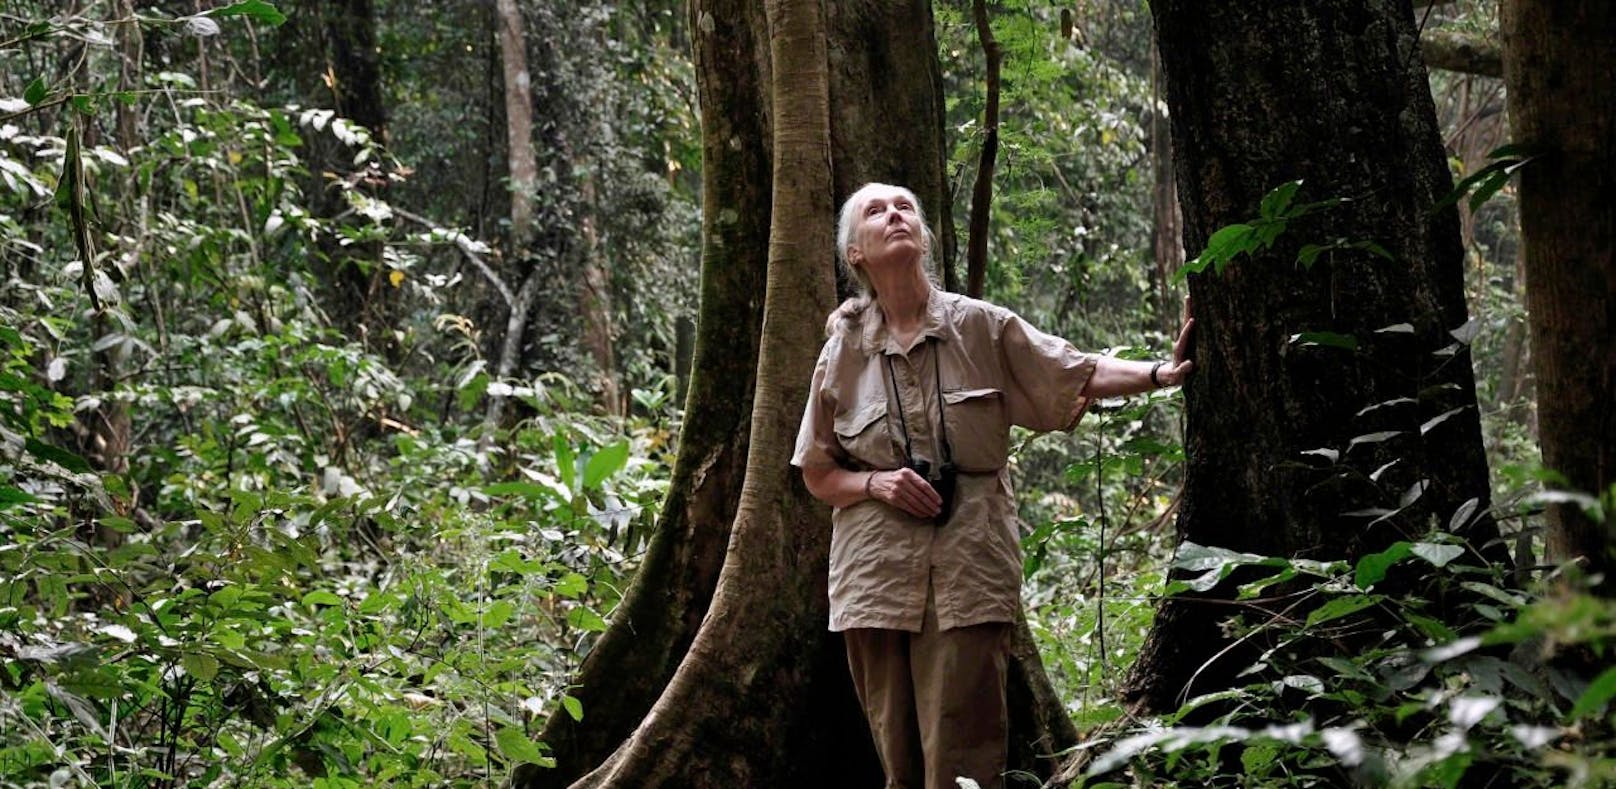 Dr. Jane Goodall feiert ihr 60-Jähriges Forschungsjubiläum im März 2020 in Wien